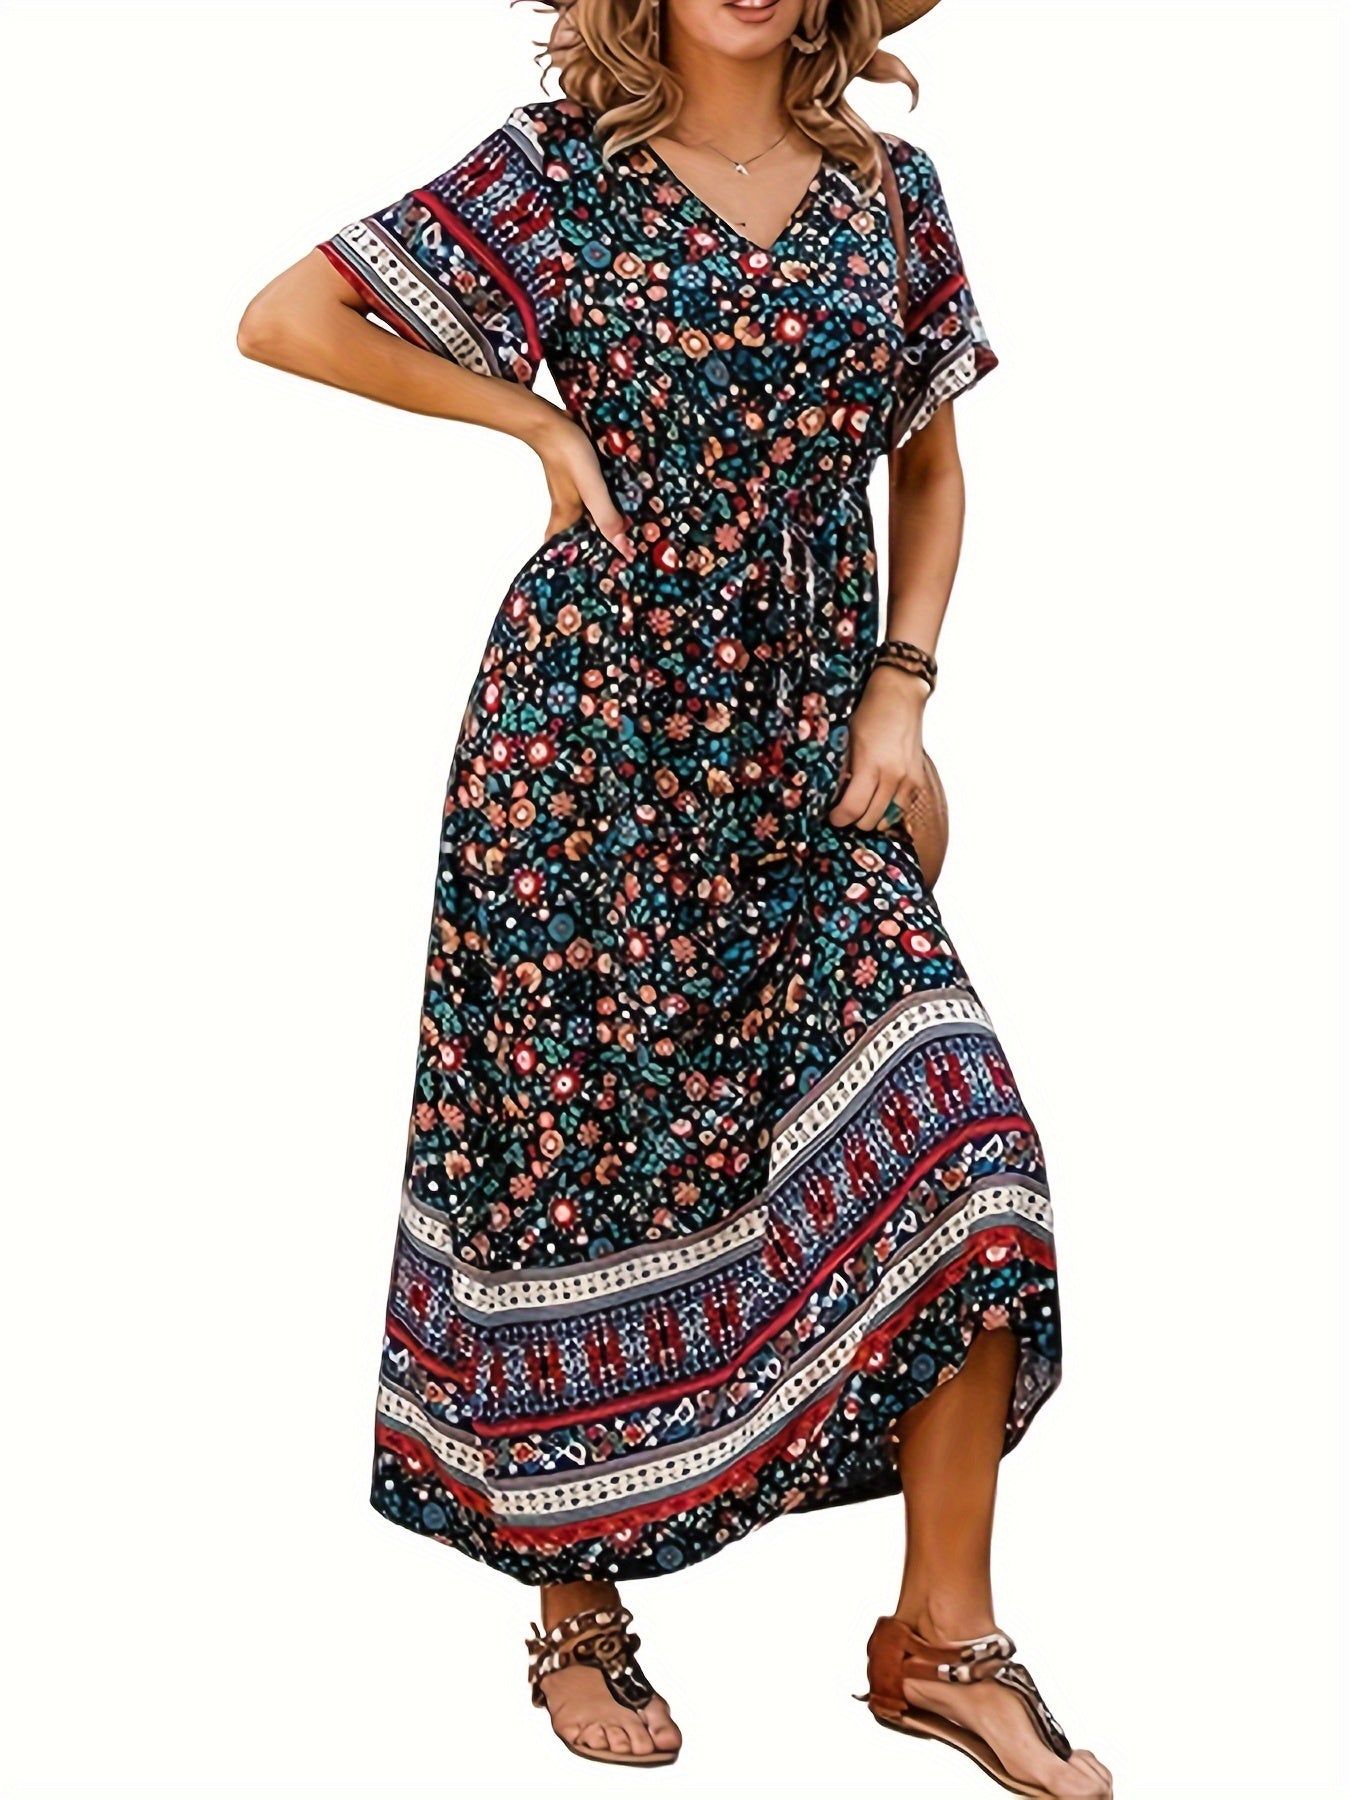 Bohemian Ditsy Floral Print Elegant Short Sleeve Midi Dress For Spring & Summer, Women's Clothing